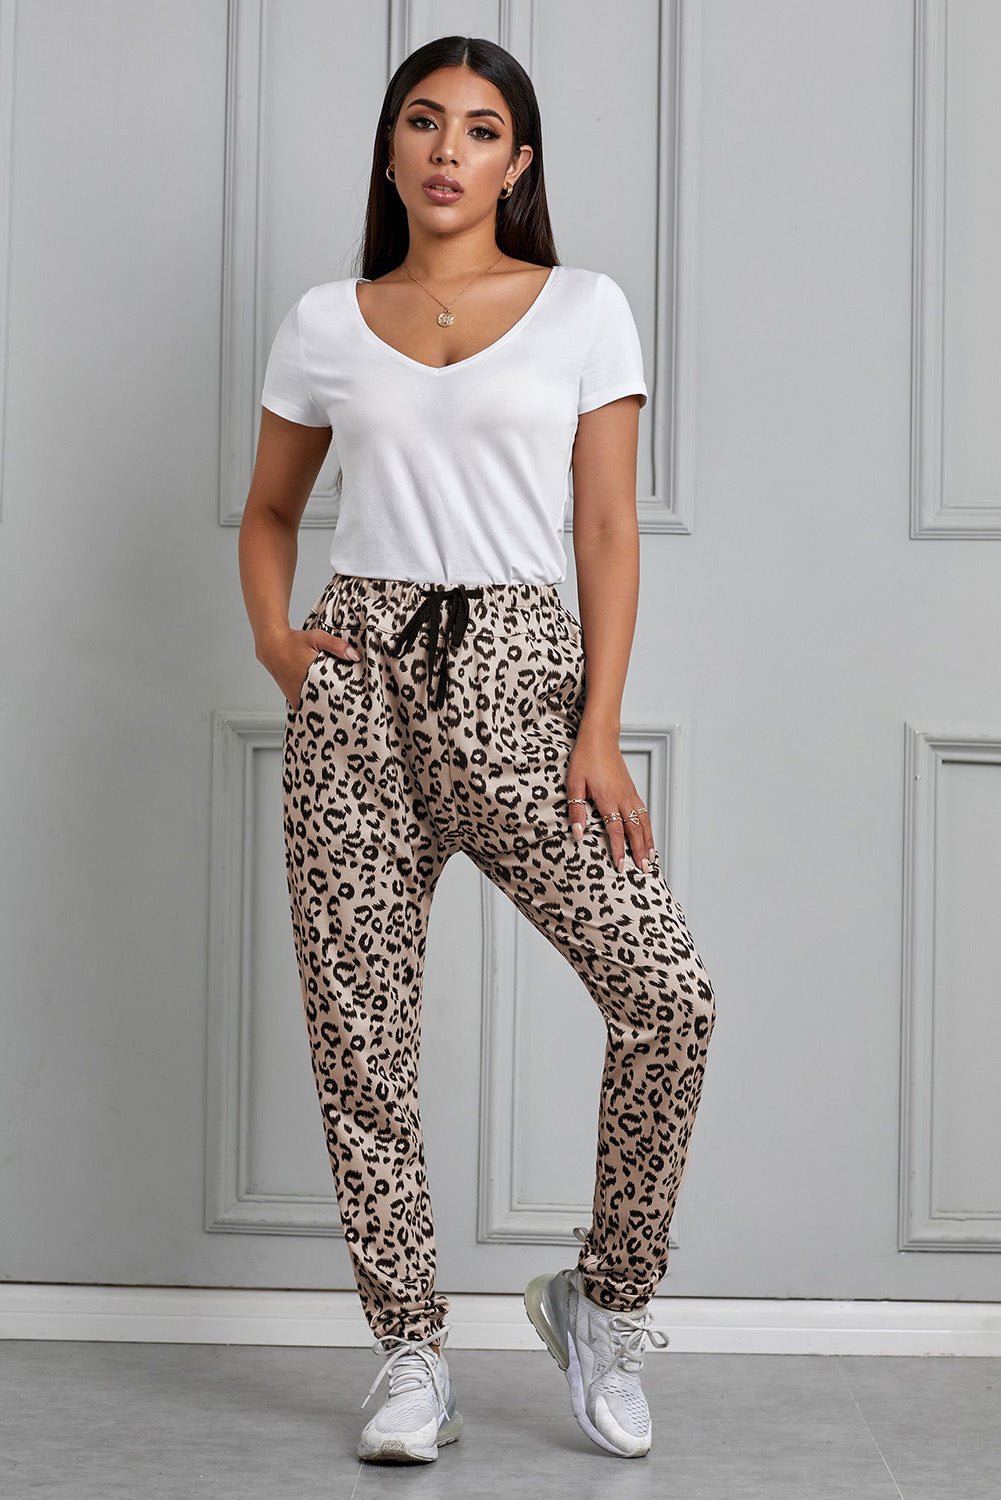 Leopard Print Casual Skinny Pants